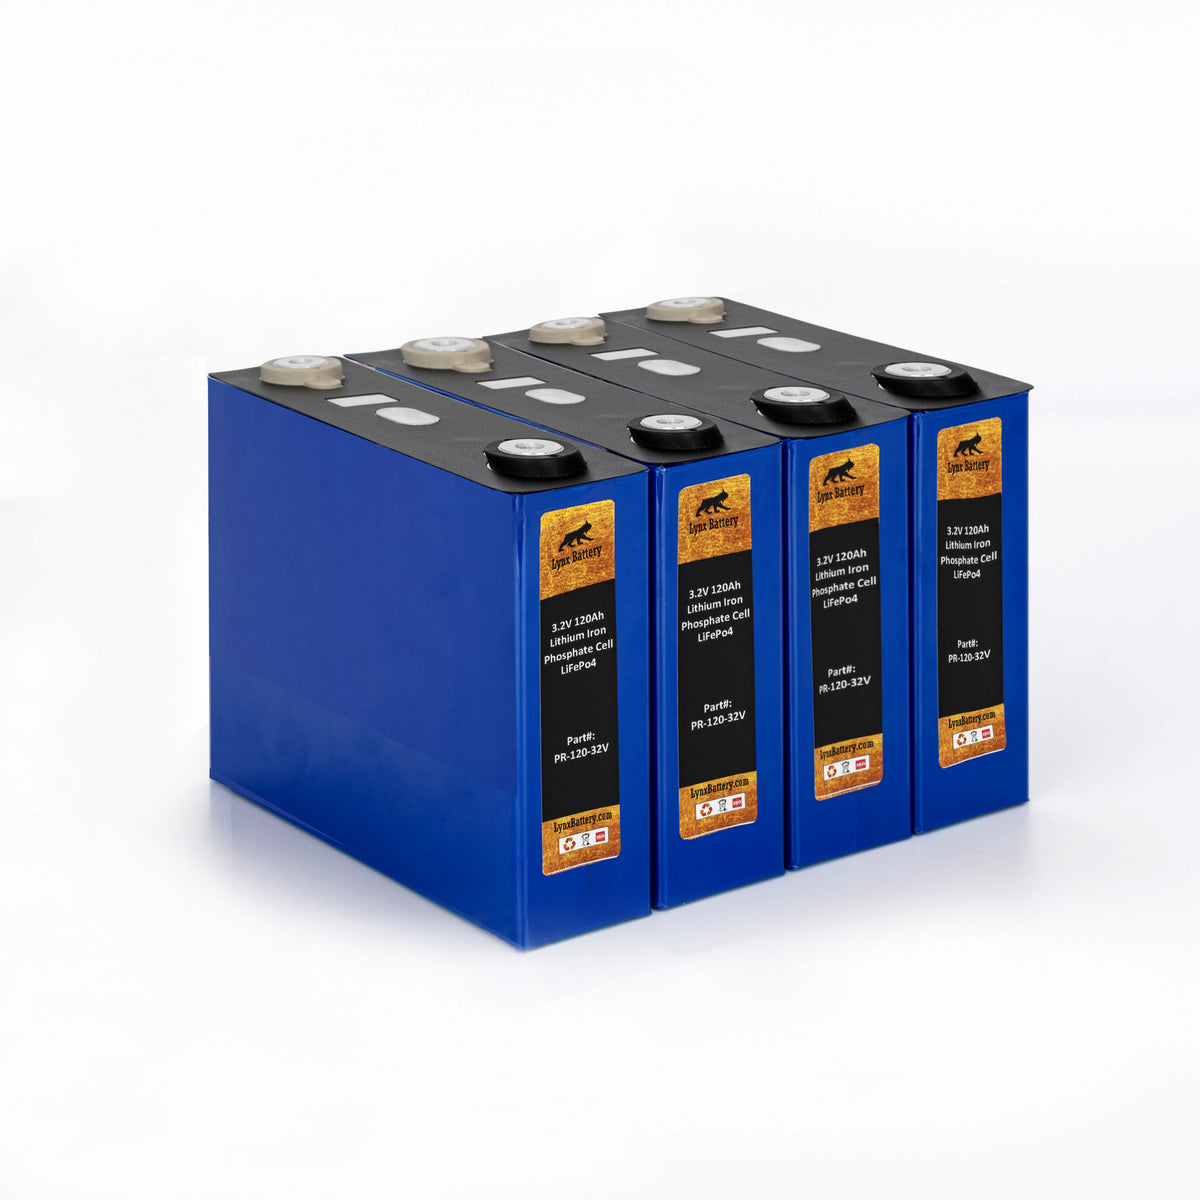 Lynx Battery Box, Small - 47700399